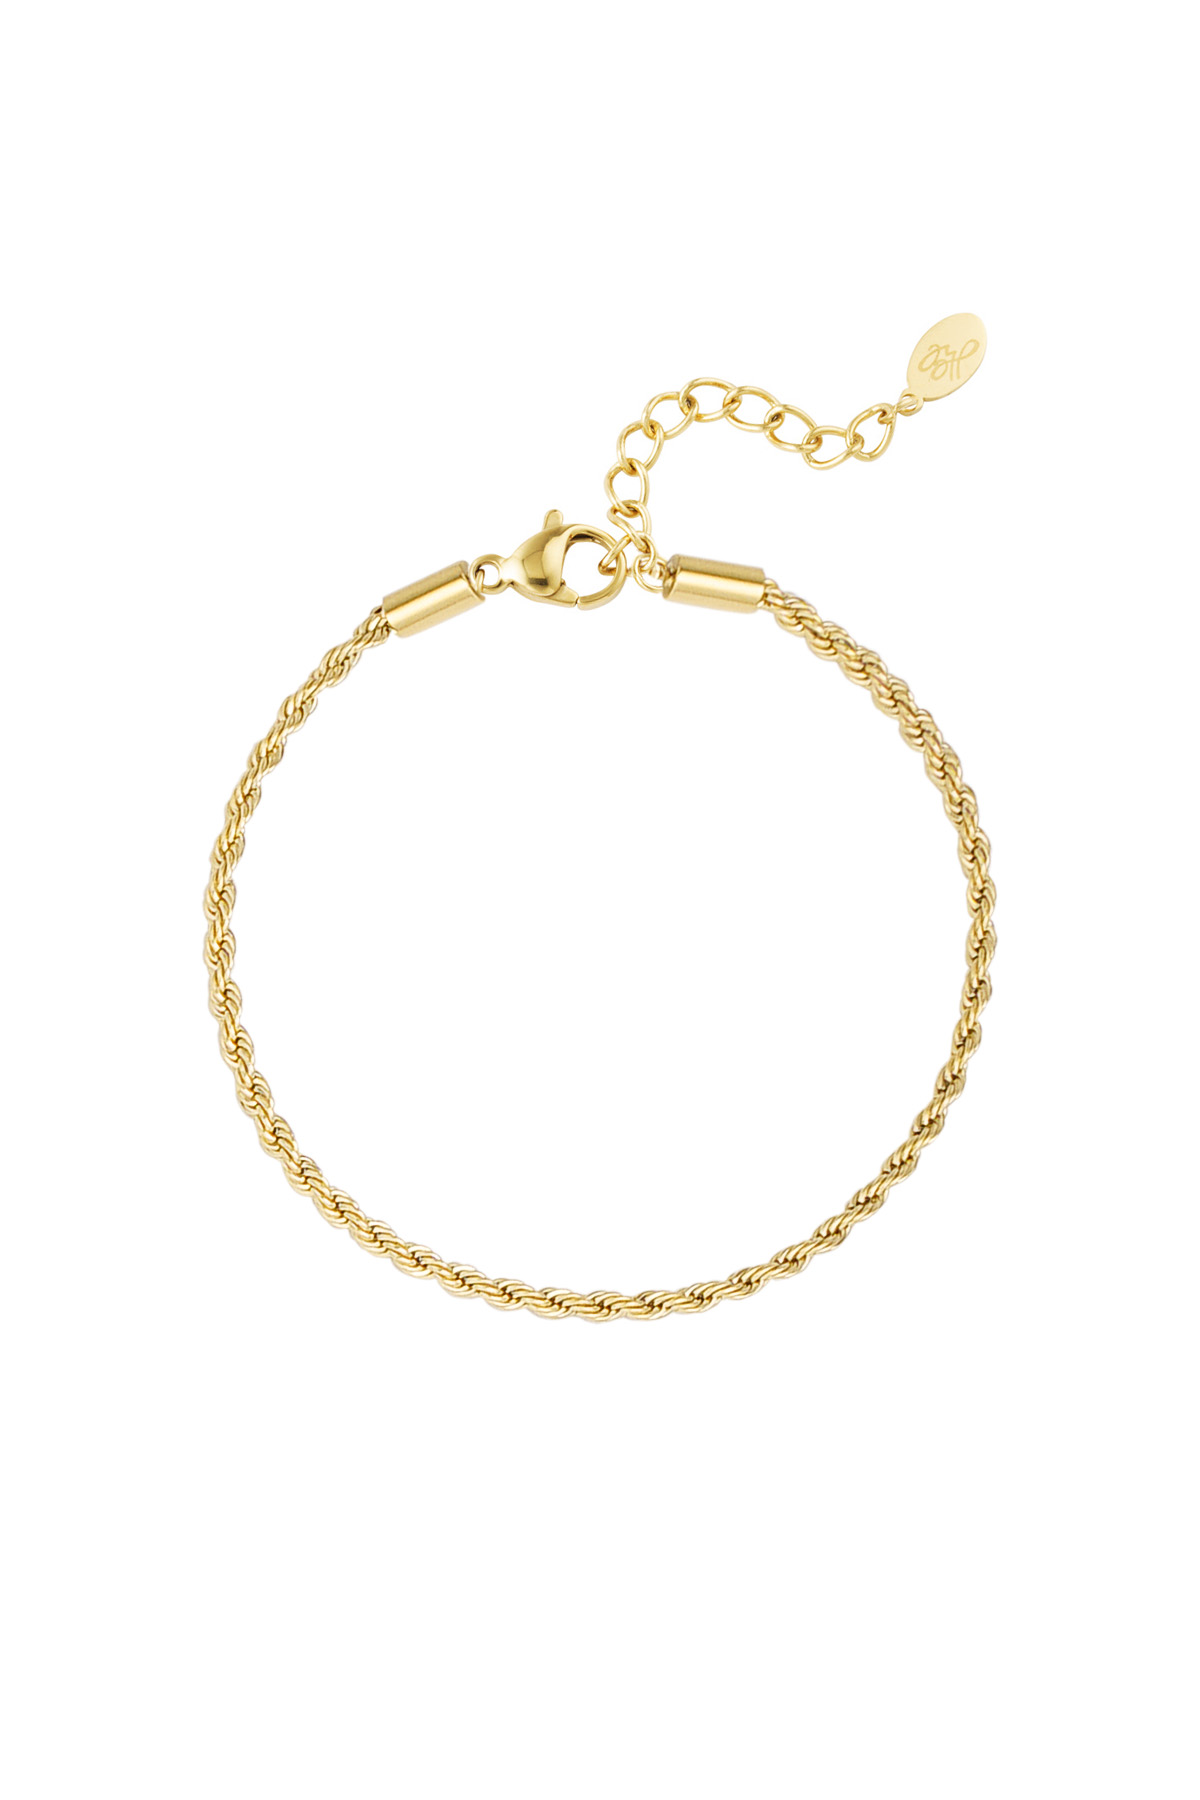 Bracelet jasseron twisted narrow - gold-2.0MM 